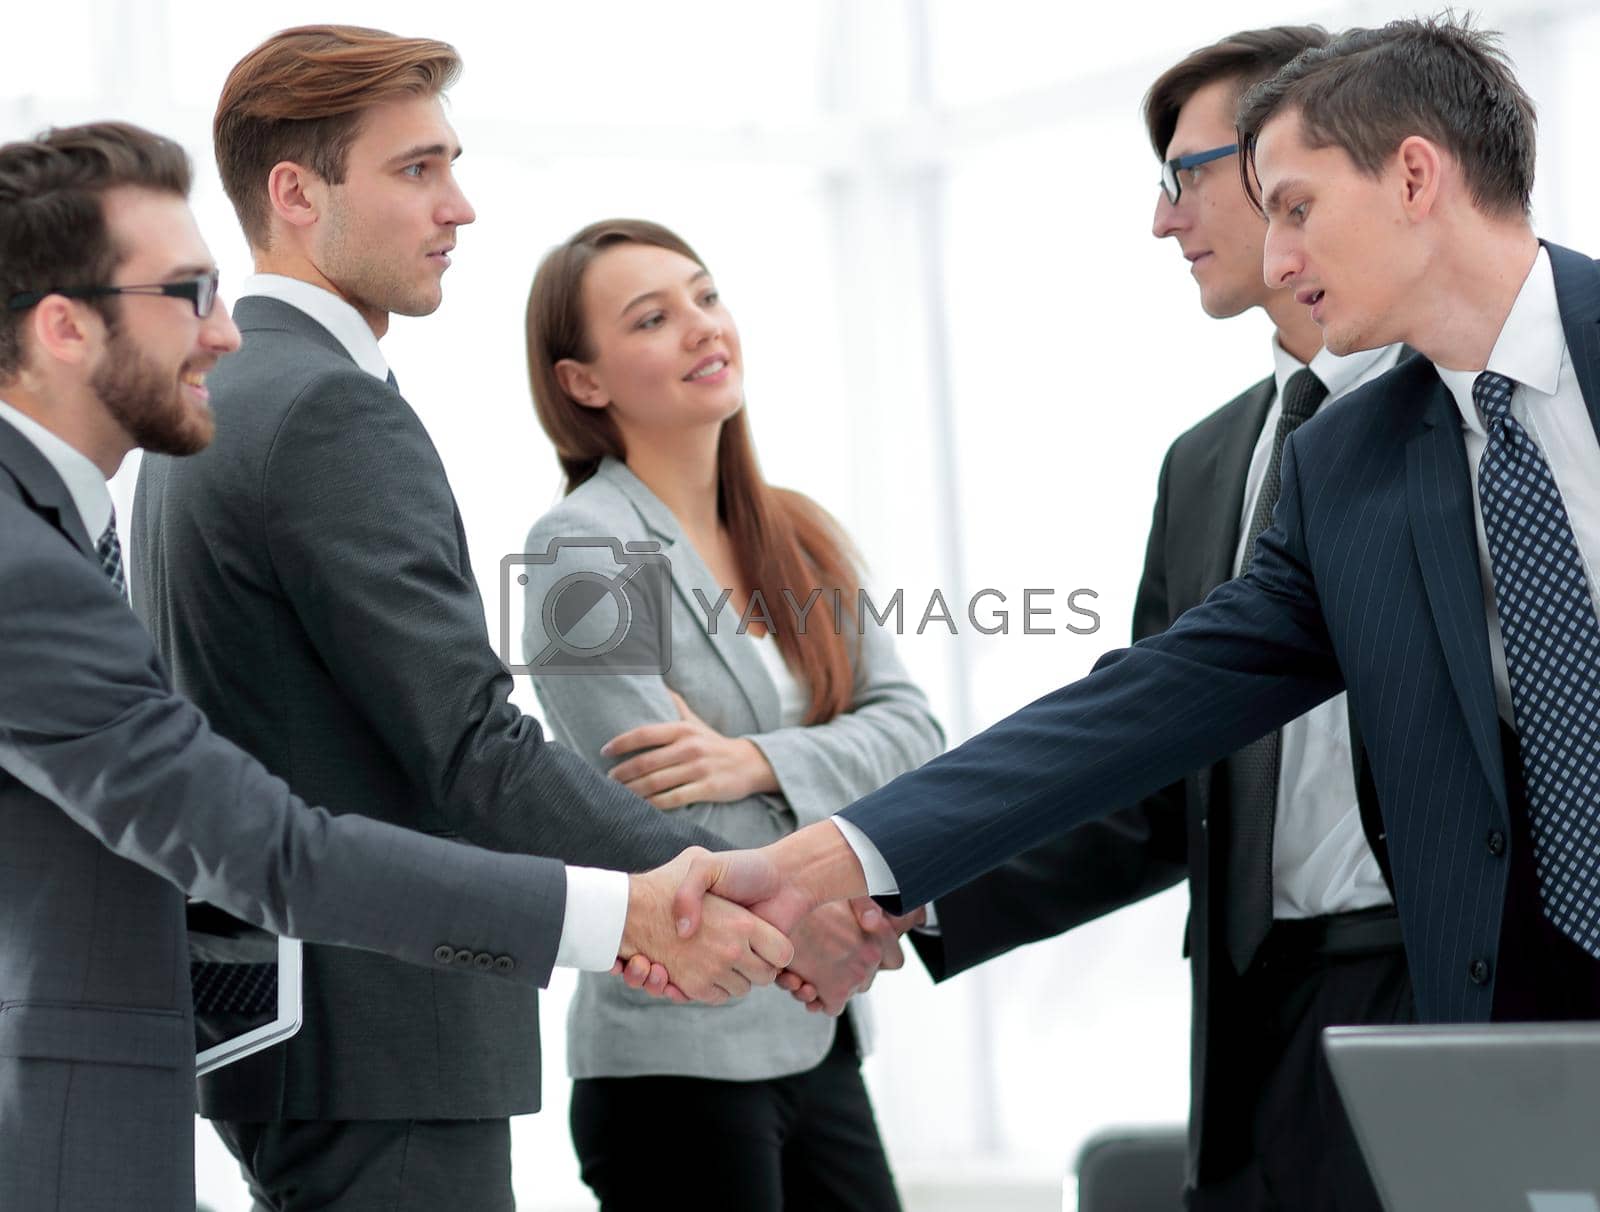 Royalty free image of leaders of business teams shake hands by asdf